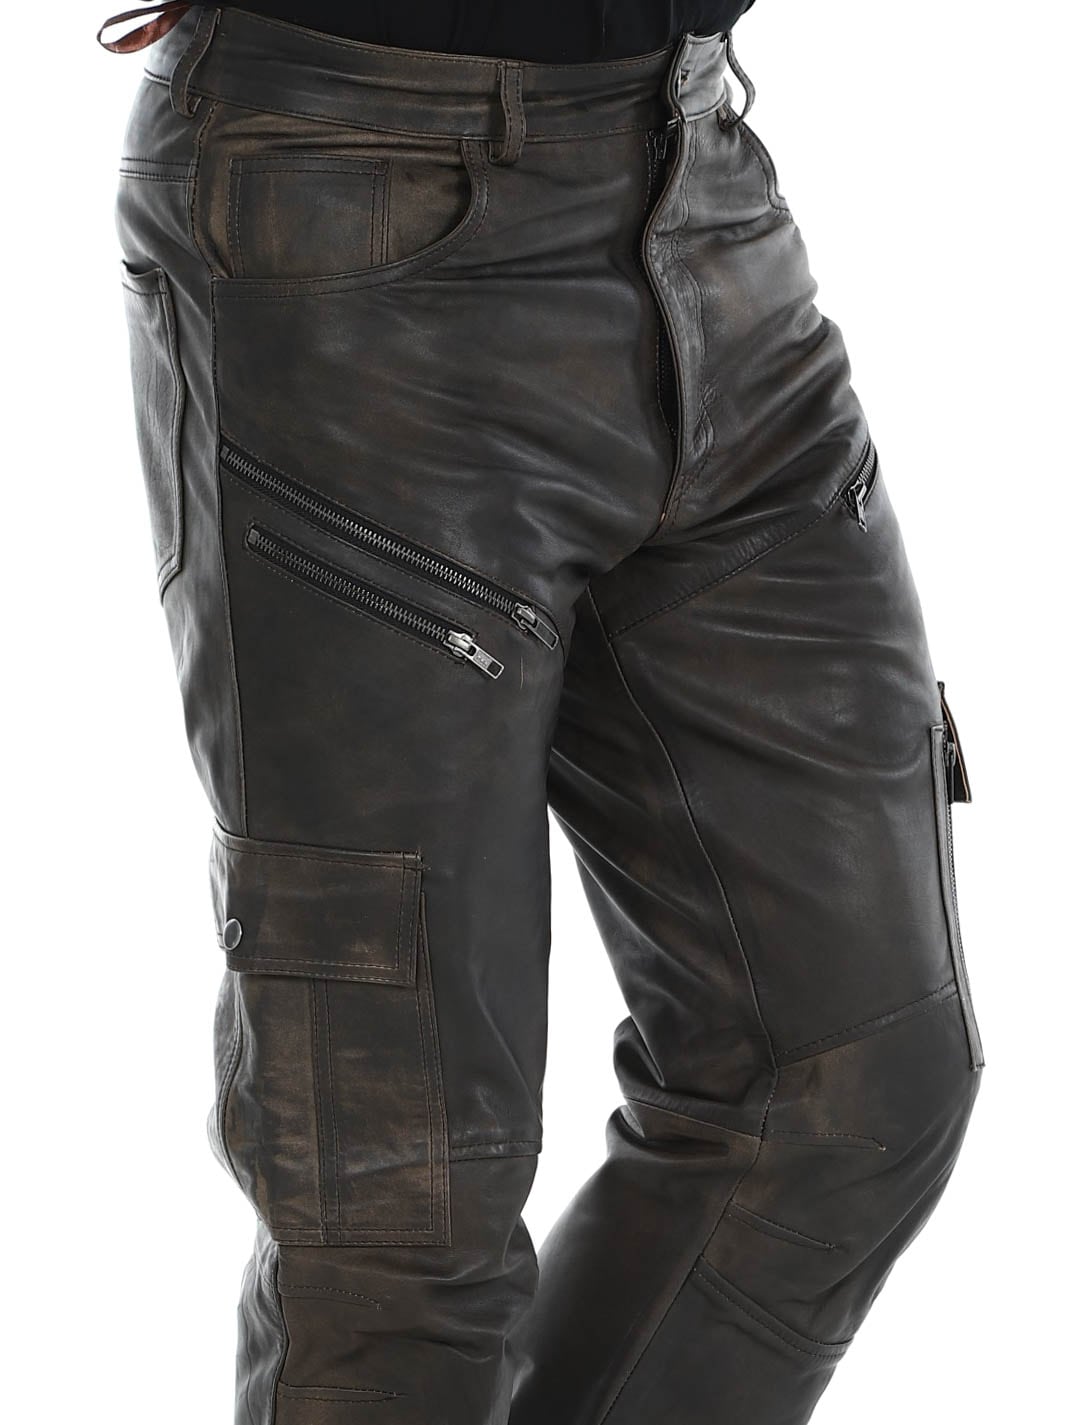 RD Salvatoro Leather Pants Brown-RD Premium Nitro Skinnbukse - Rød-RD Premium Nitro leather pants brown_4.jpg